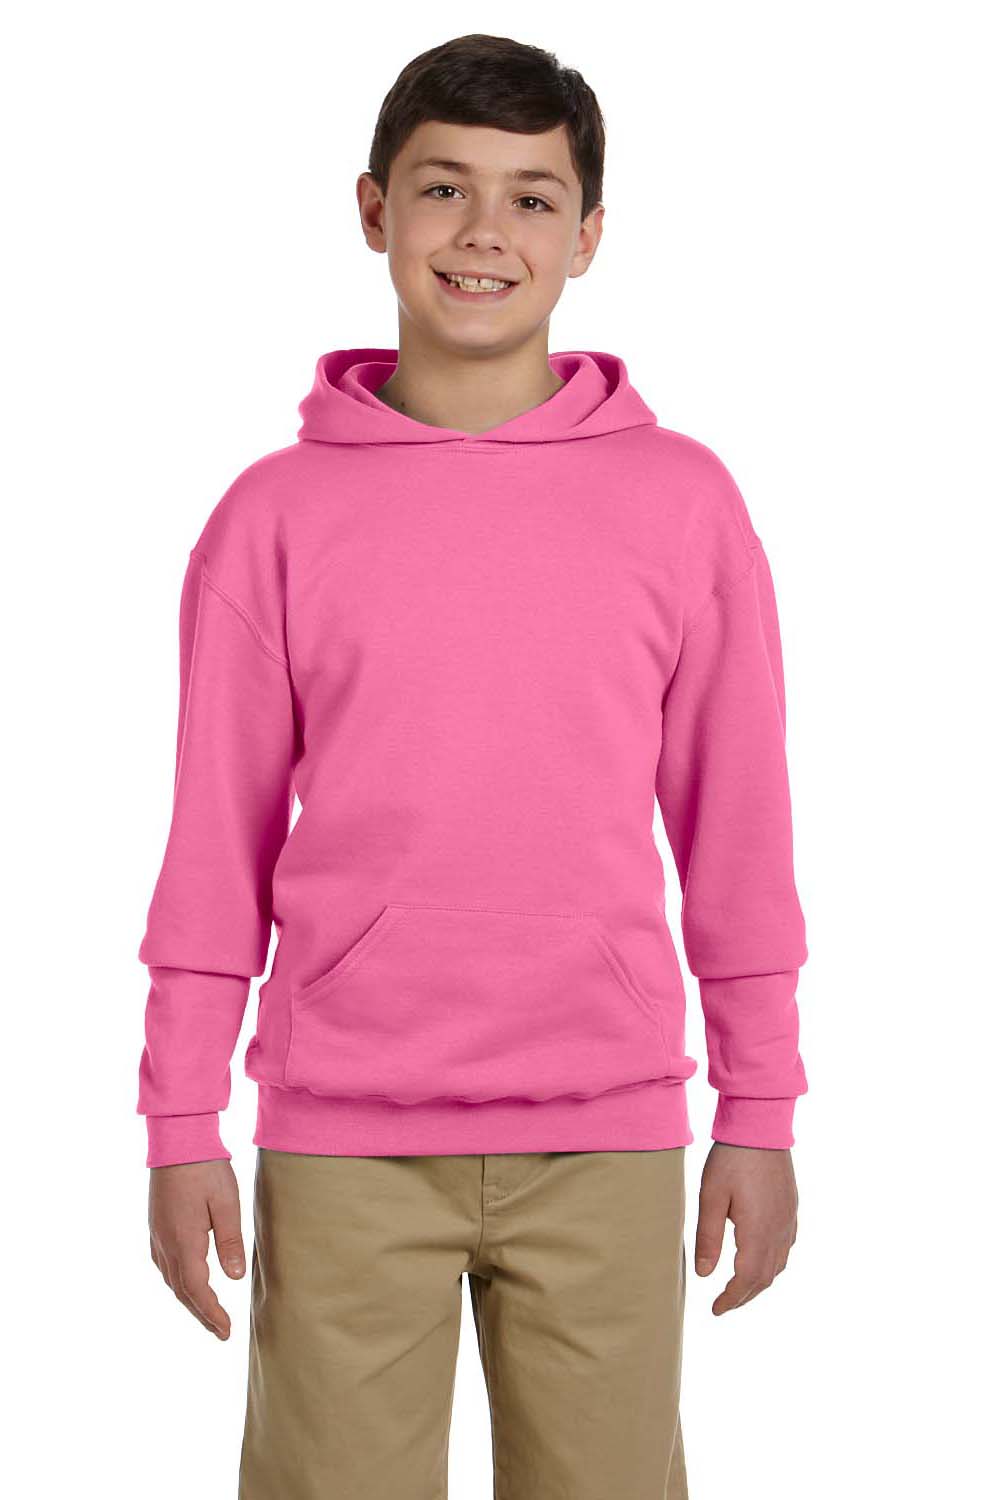 Jerzees 996Y Youth NuBlend Fleece Hooded Sweatshirt Hoodie Neon Pink Front